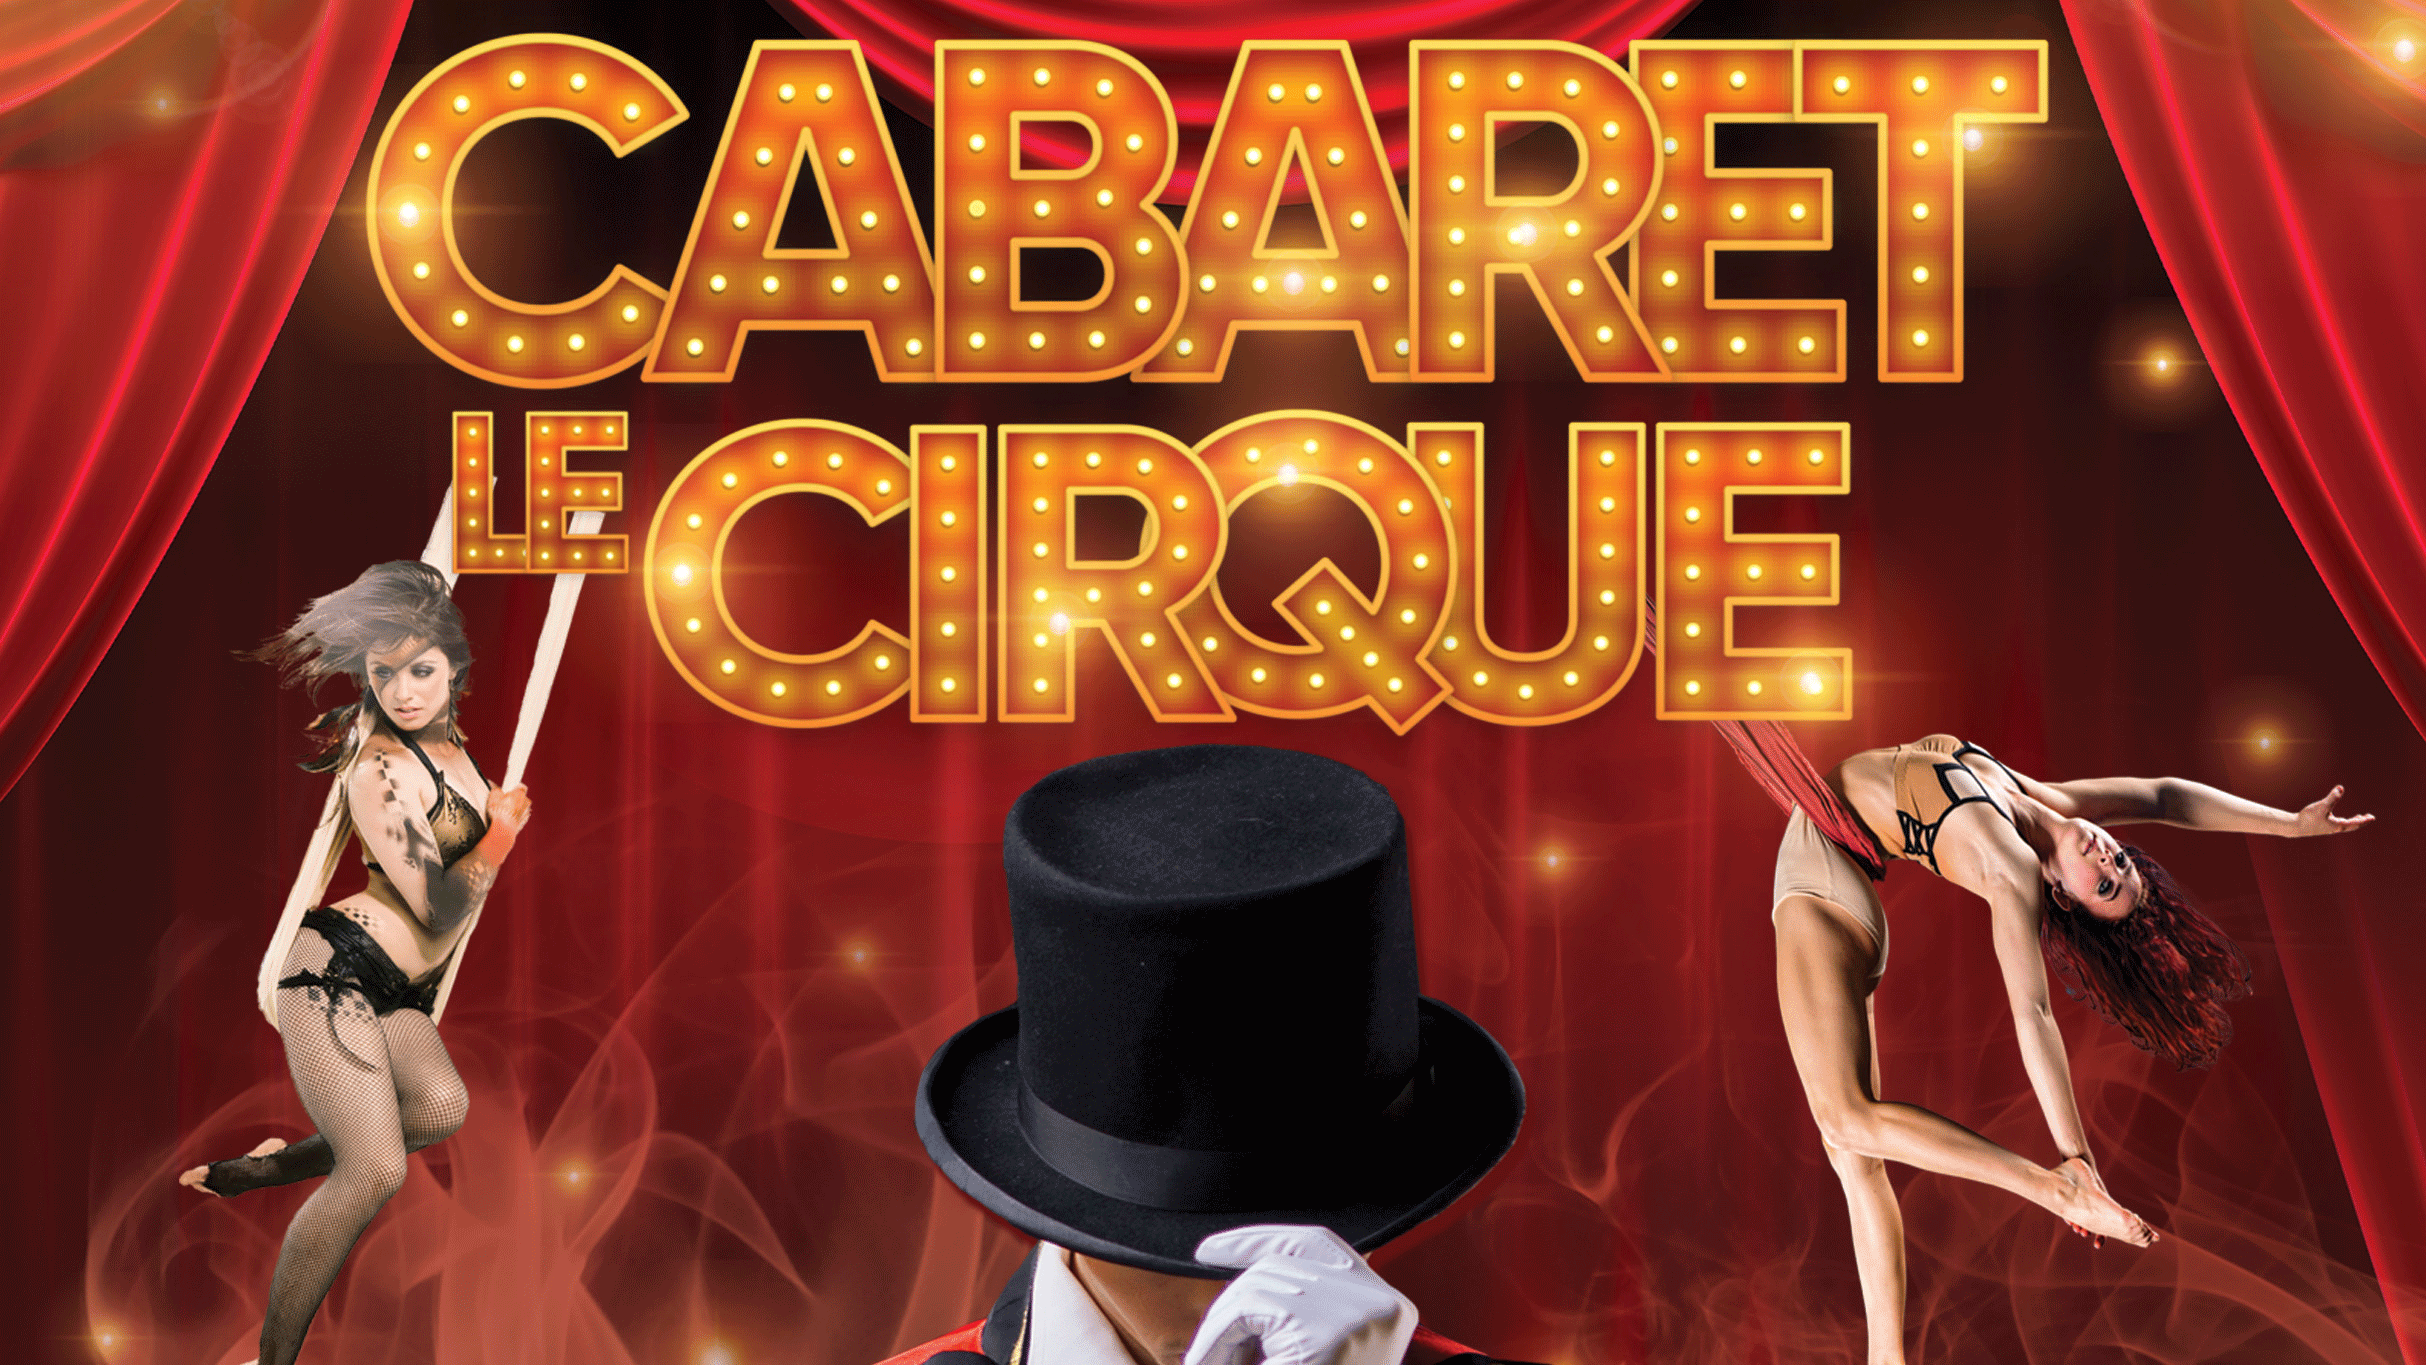 Cabaret Le Cirque (Reno, NV) in Reno promo photo for Me + 3 Promotional  presale offer code